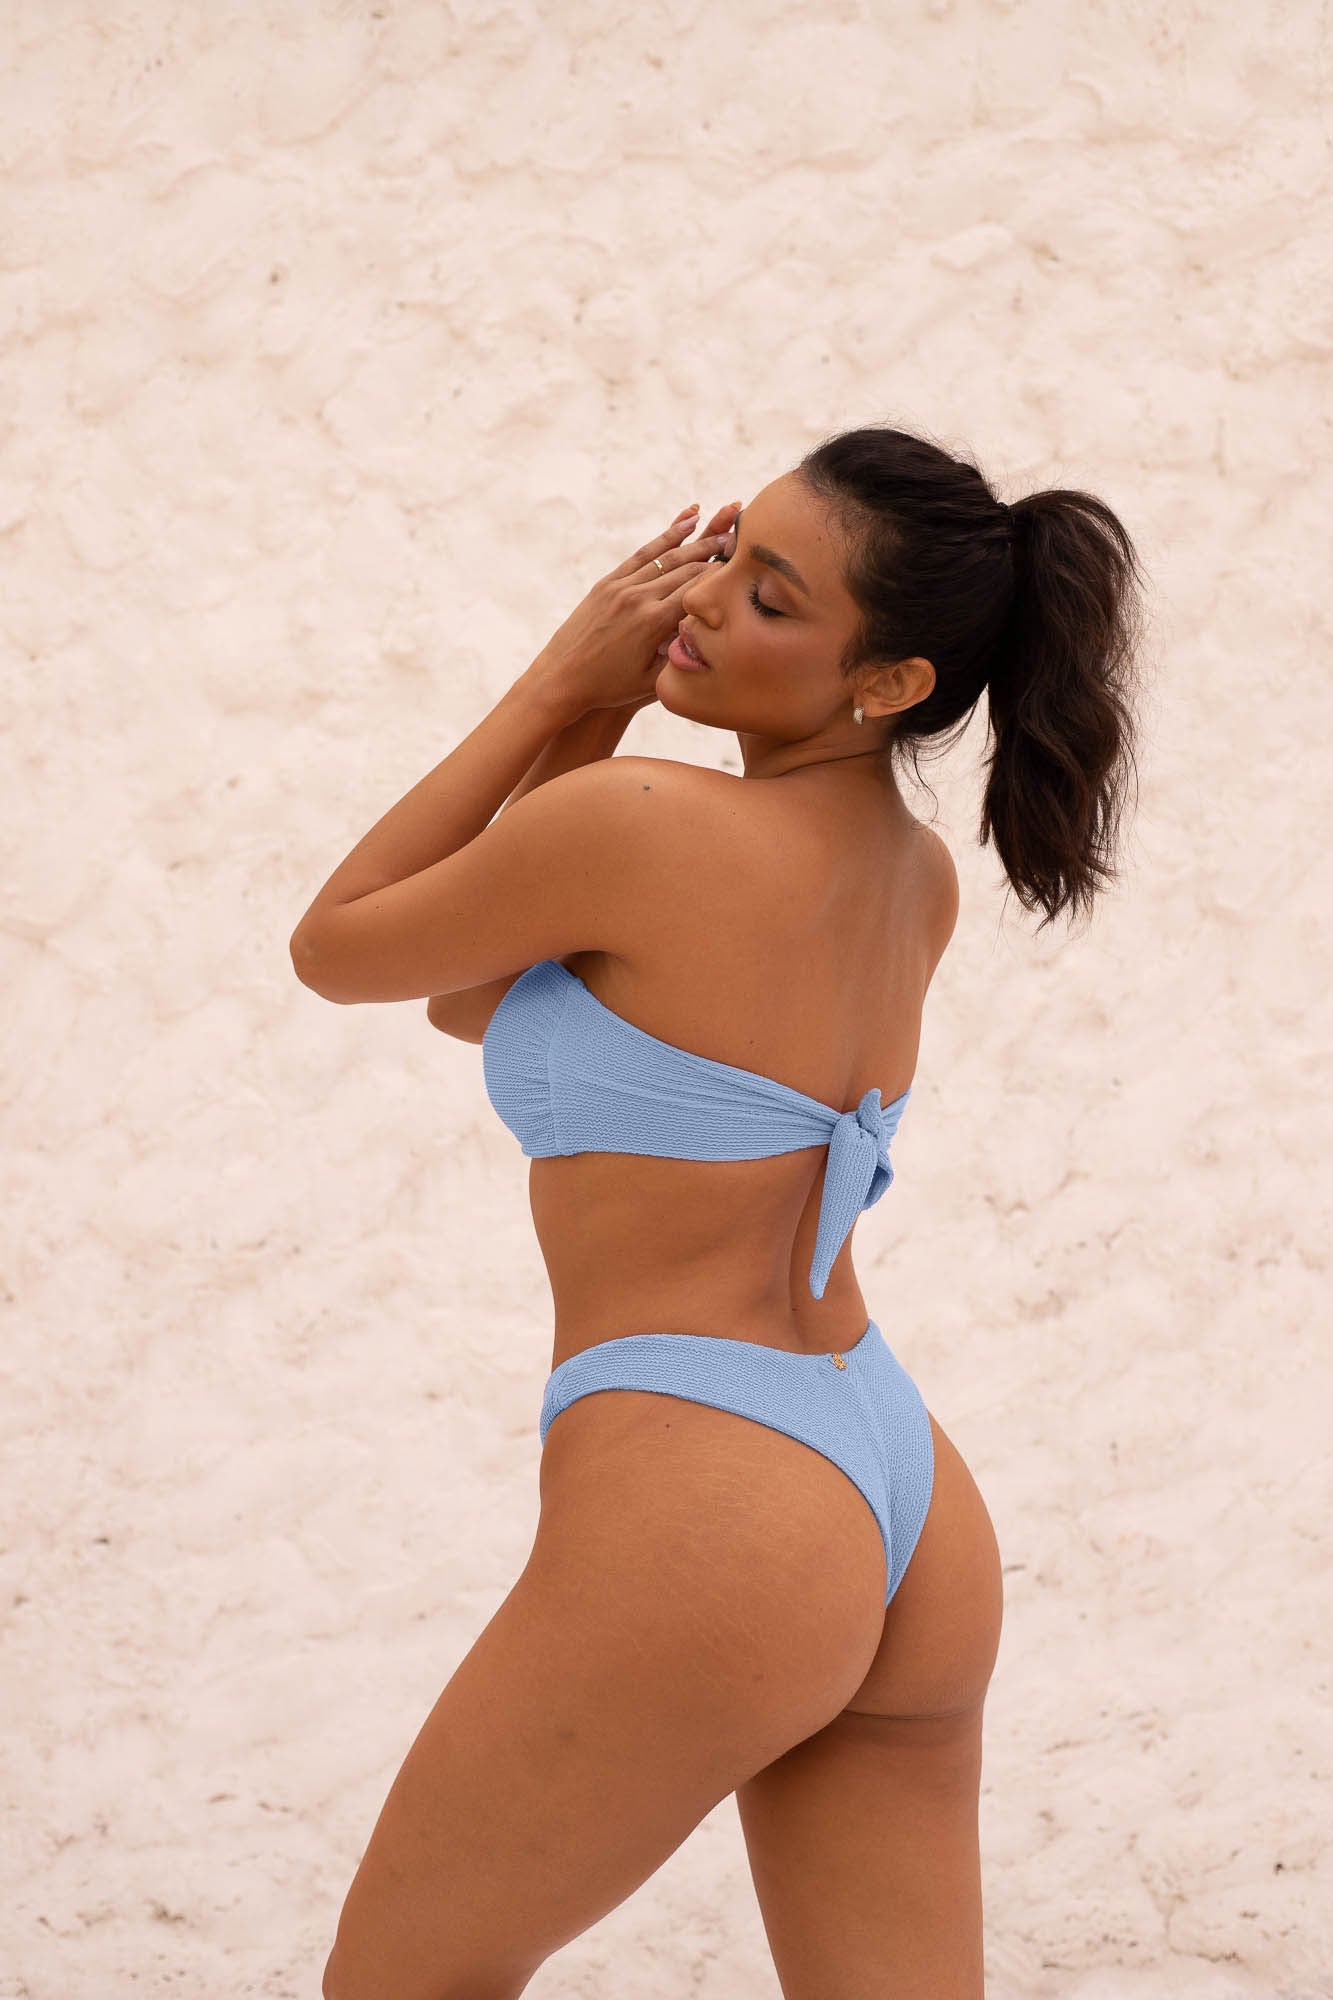 Firenze Bandeau Bikini Set | Baby Blue - Acqua de Luxe Beachwear